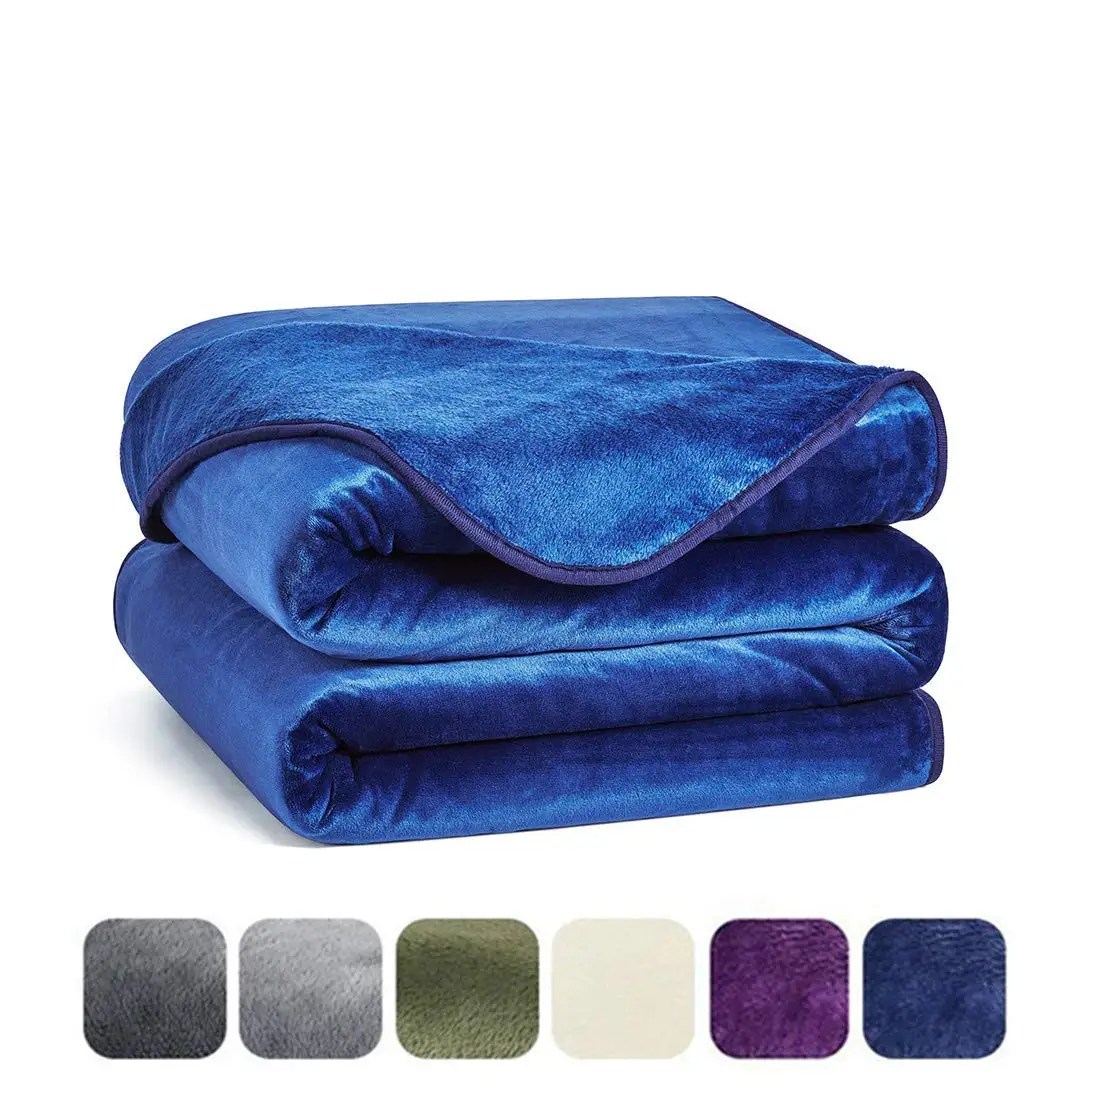 Cheap Velour Blanket King Size, find Velour Blanket King Size deals on ...